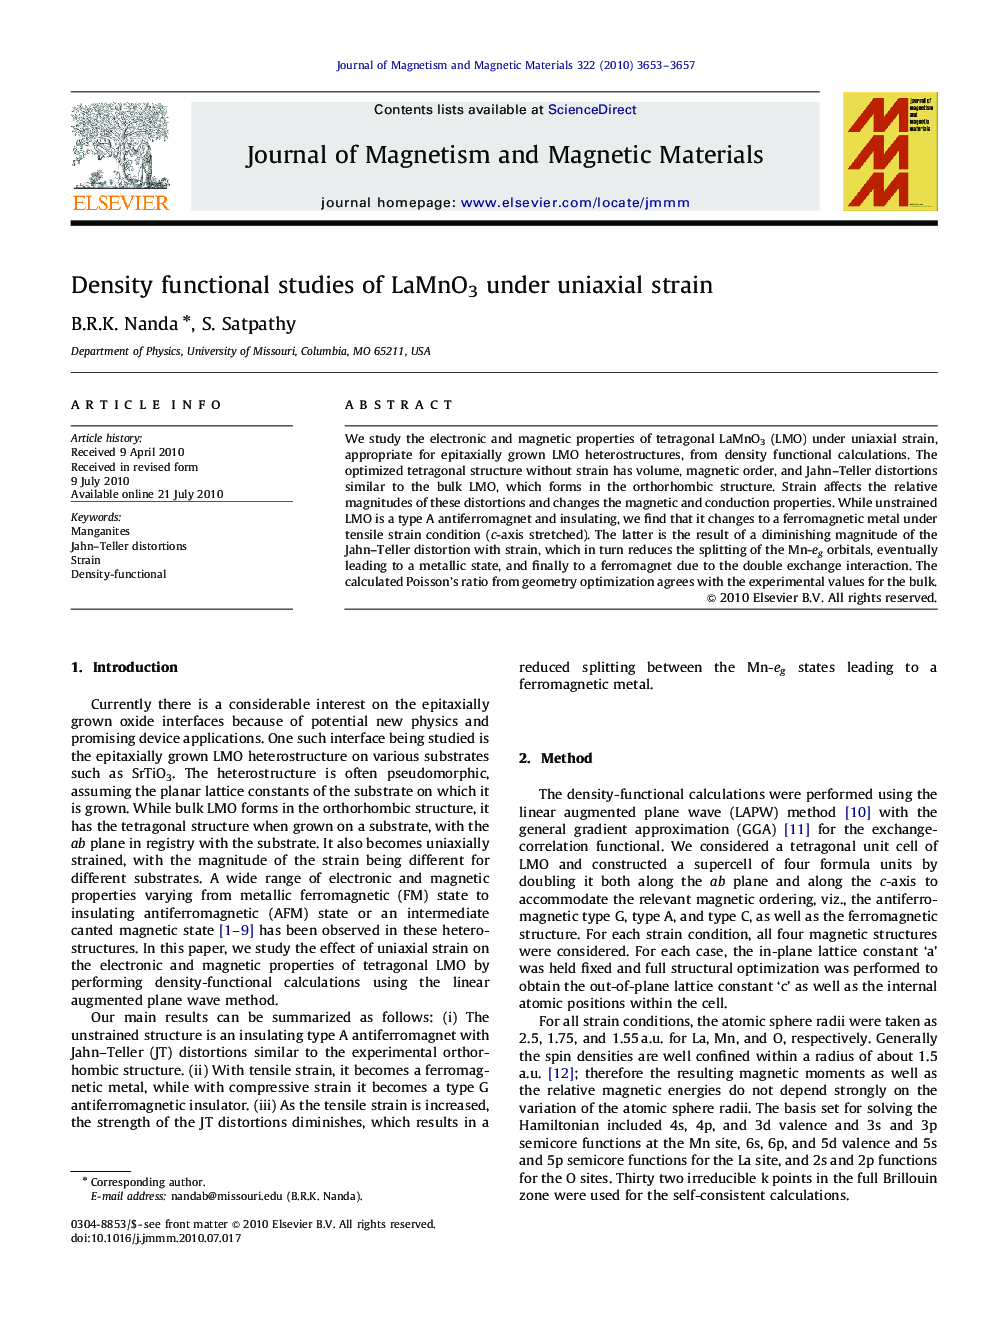 Density functional studies of LaMnO3 under uniaxial strain